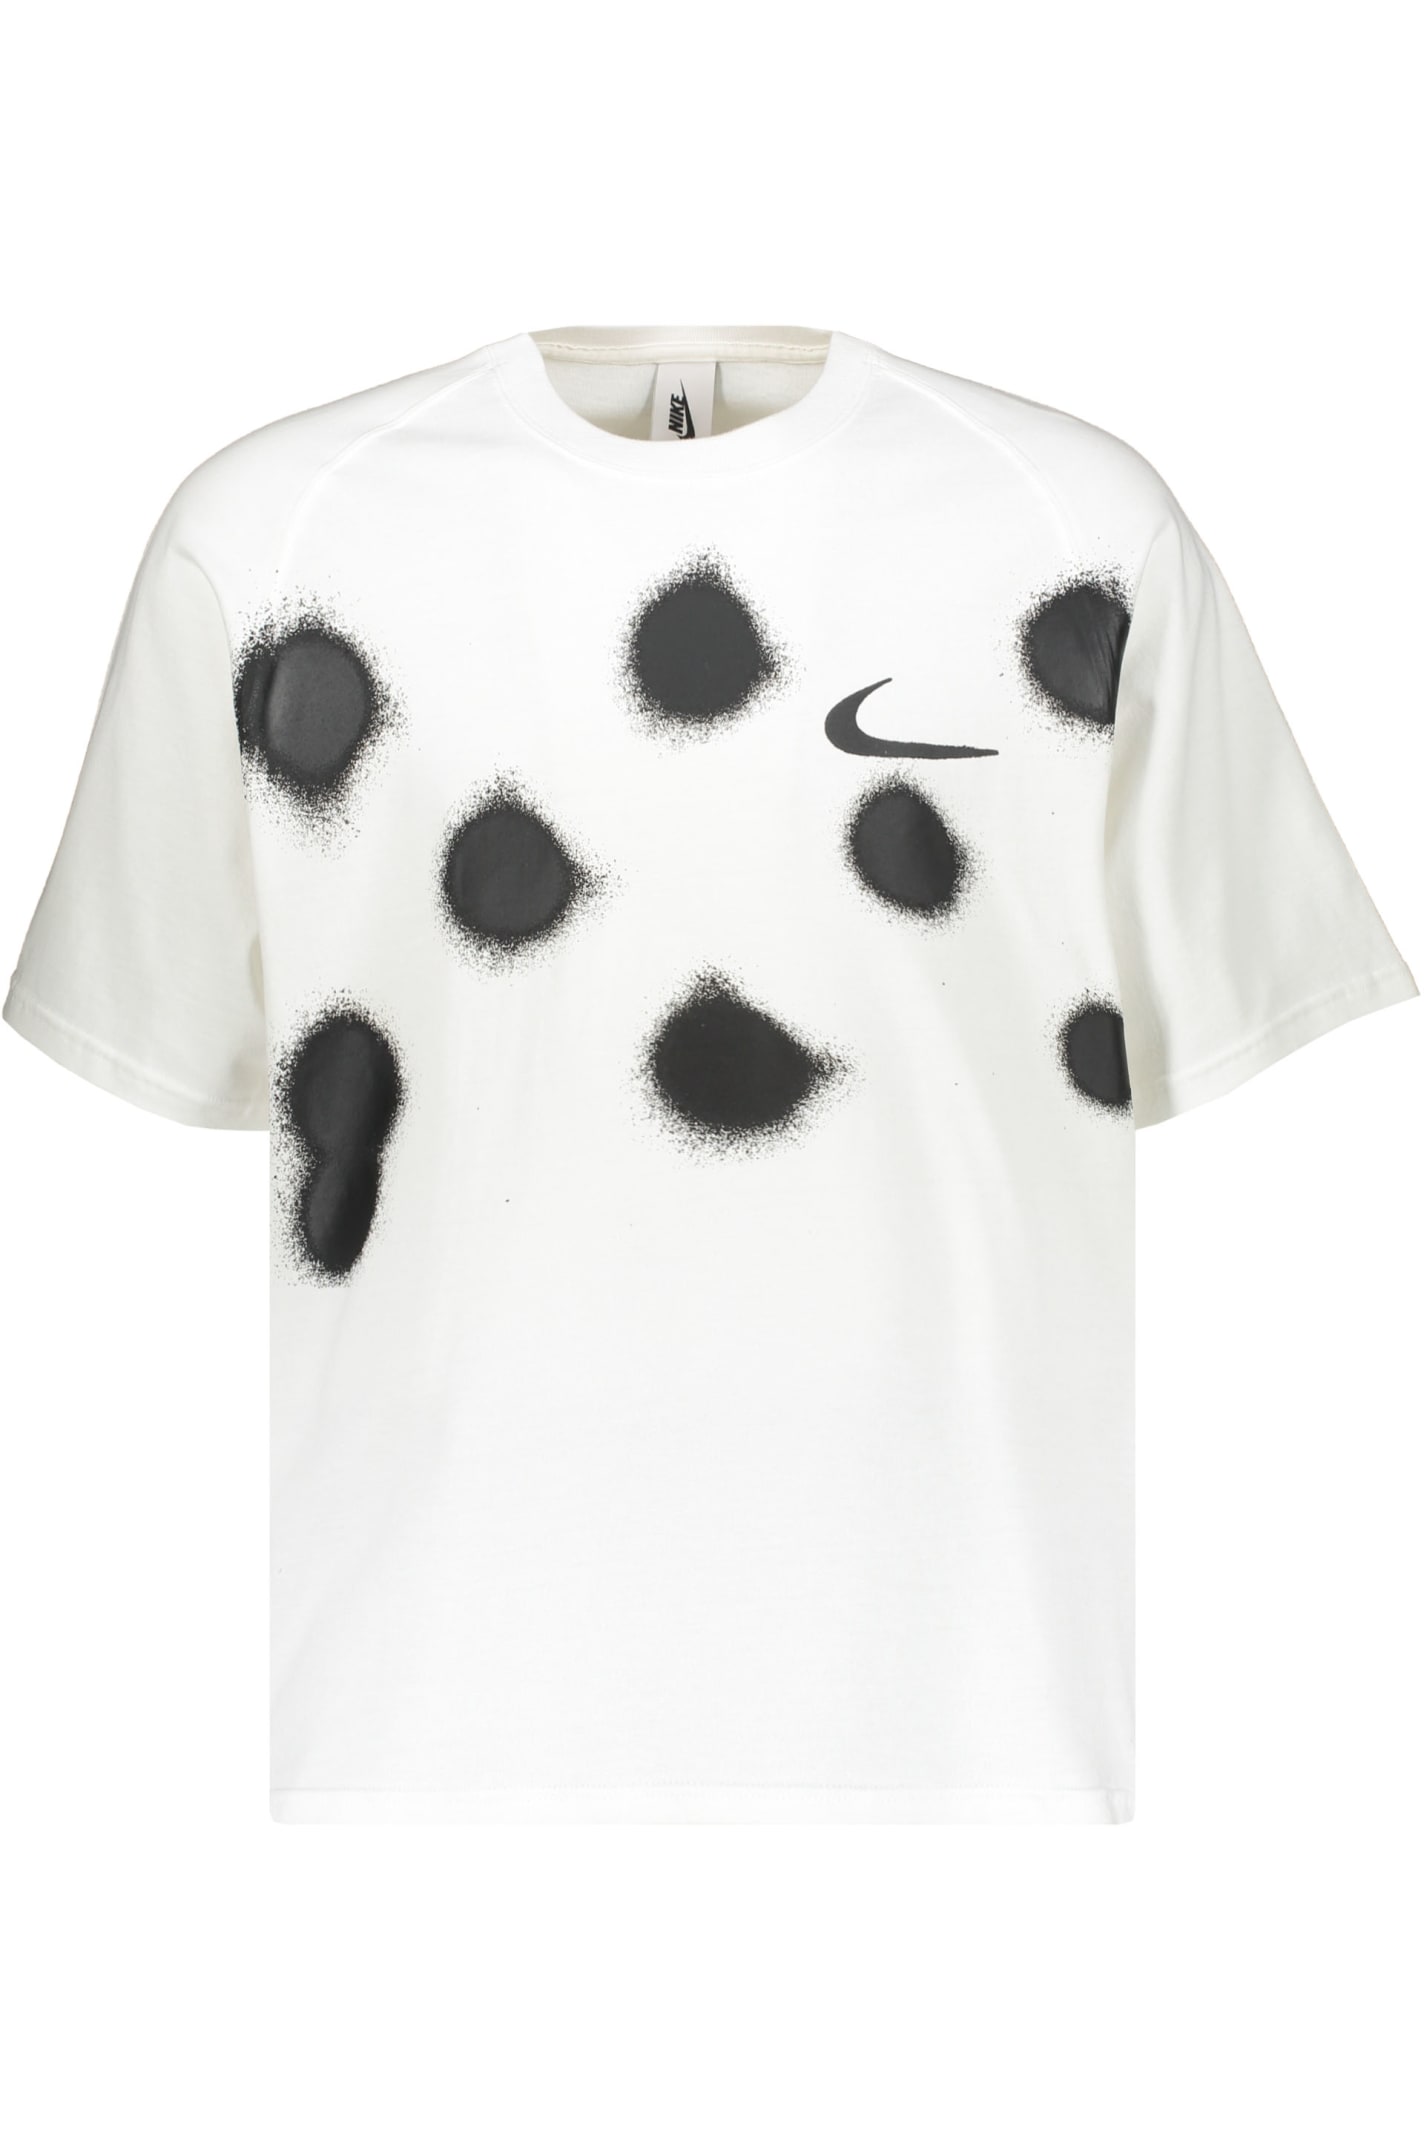 Off-white Nike X Off White Short Sleeve T-shirt